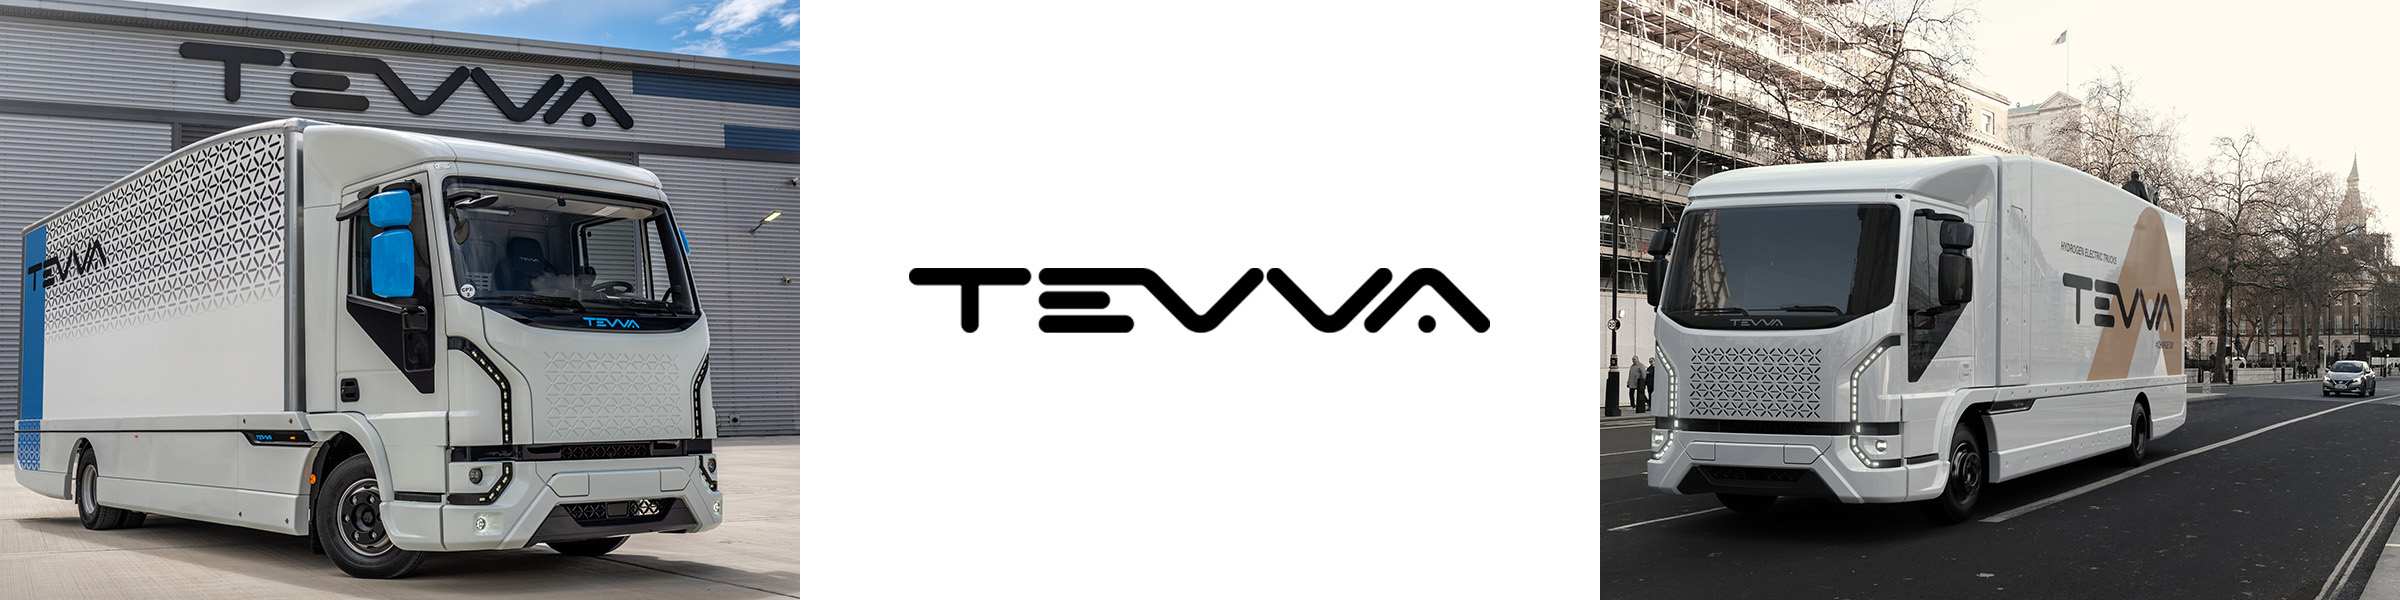 Tevva trucks and Tevva logo